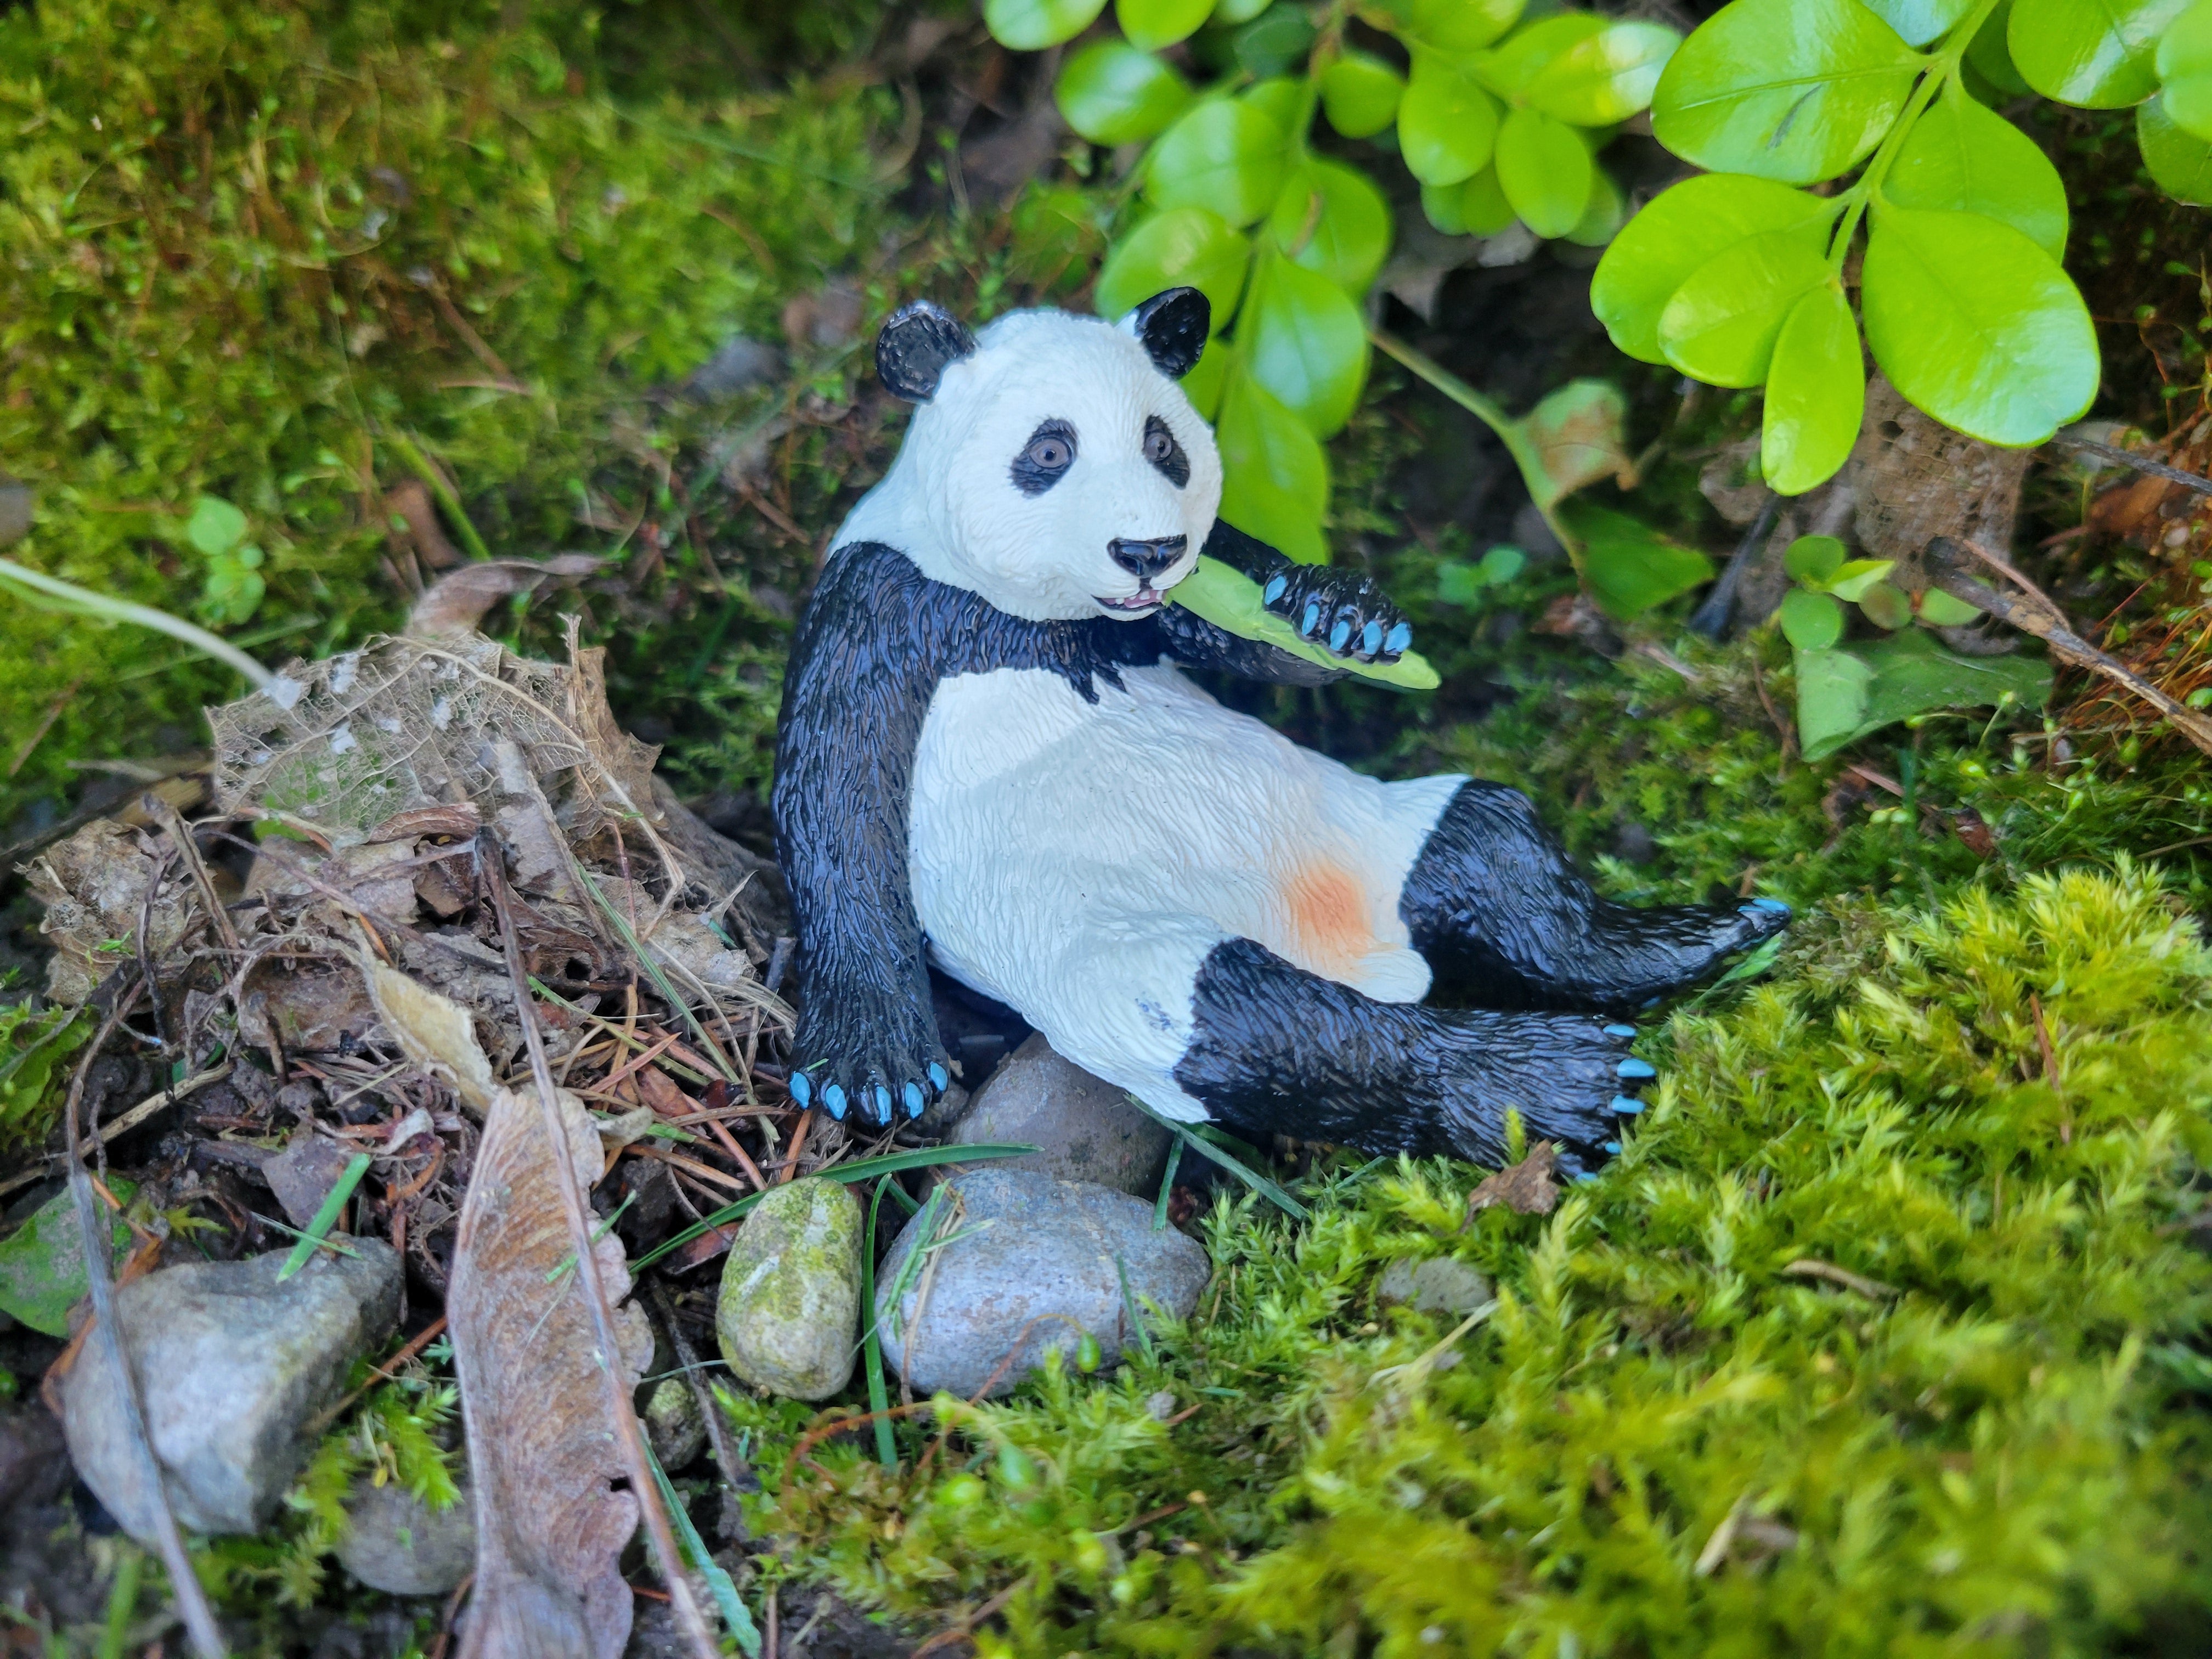 Toymany Male Giant Panda Figurine Toy-outdoor